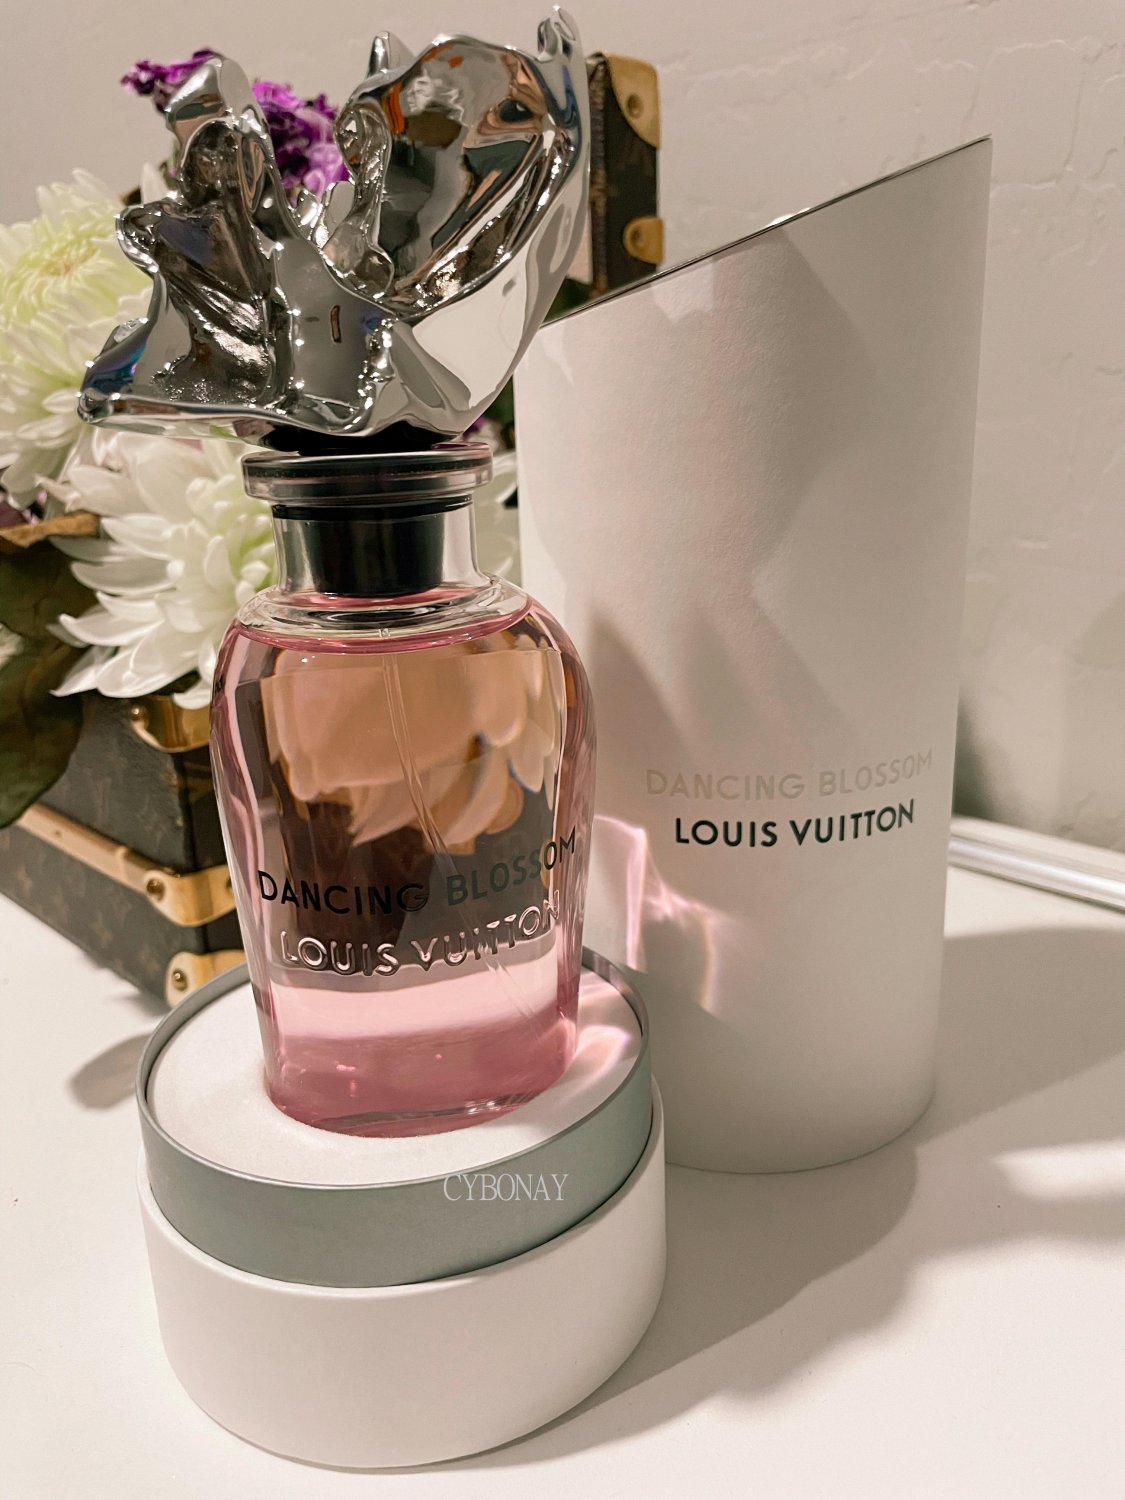 Louis Vuitton® Dancing Blossom  Louis vuitton, Perfume bottles, Louis  vuitton fragrance